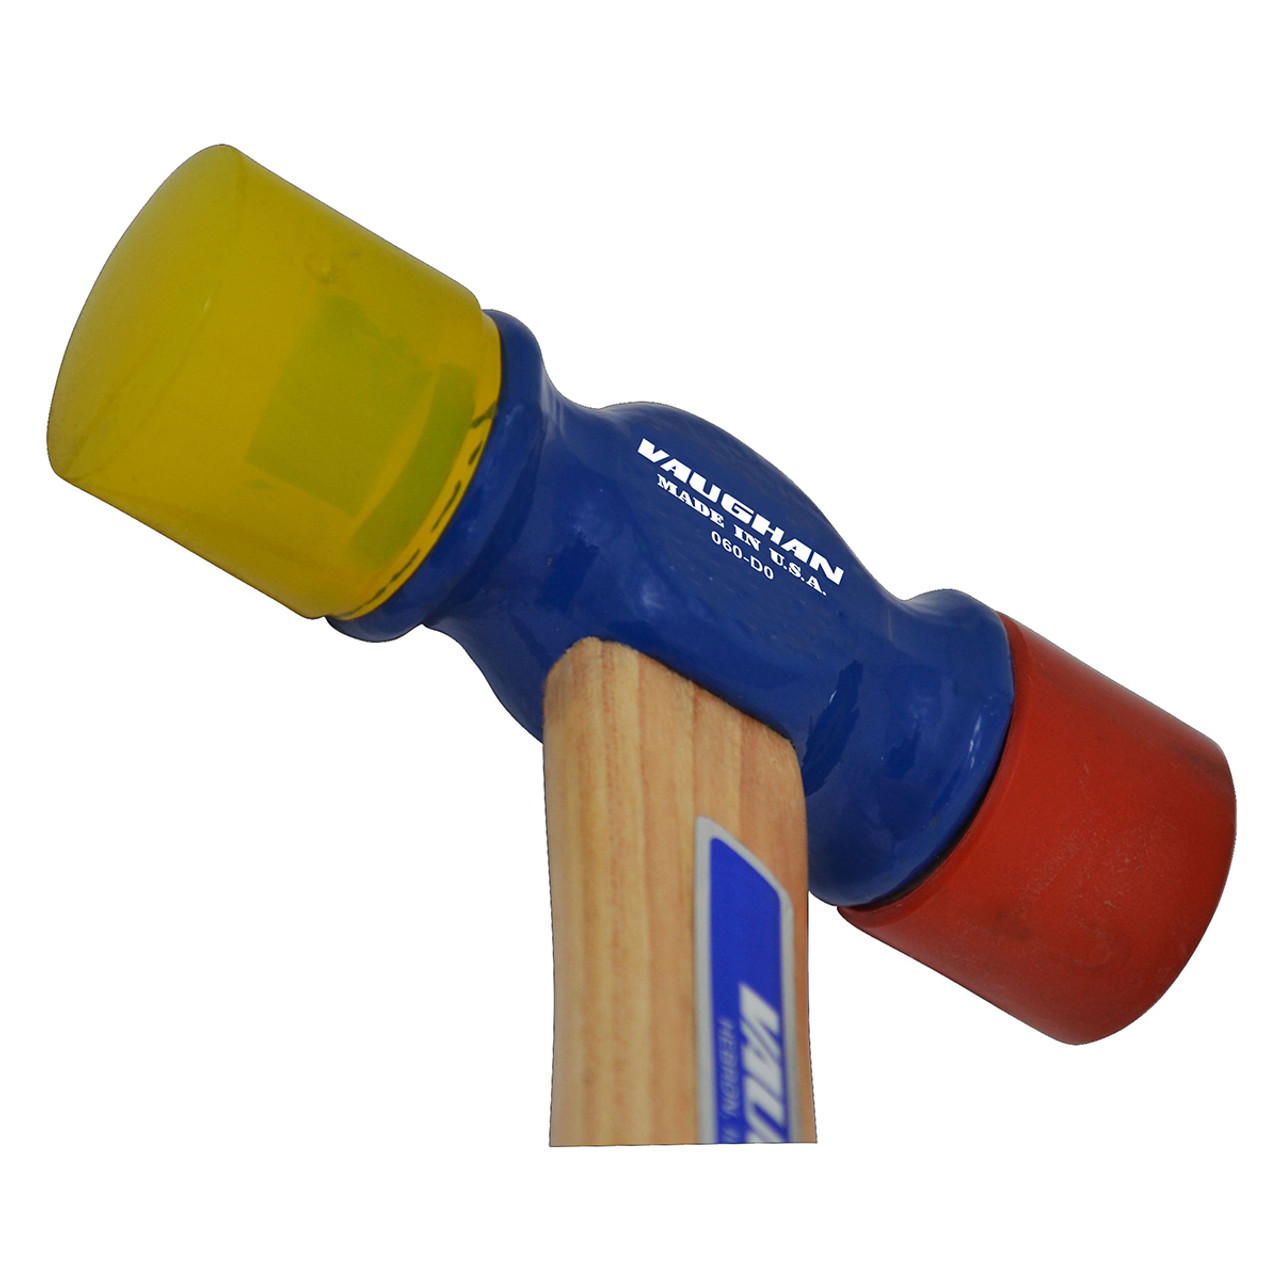 Vaughan 12oz Replaceable tip hammer, 1 3/8" face diameter, 12 1/2" wood handle. 1 red tip, 1 yellow tip.